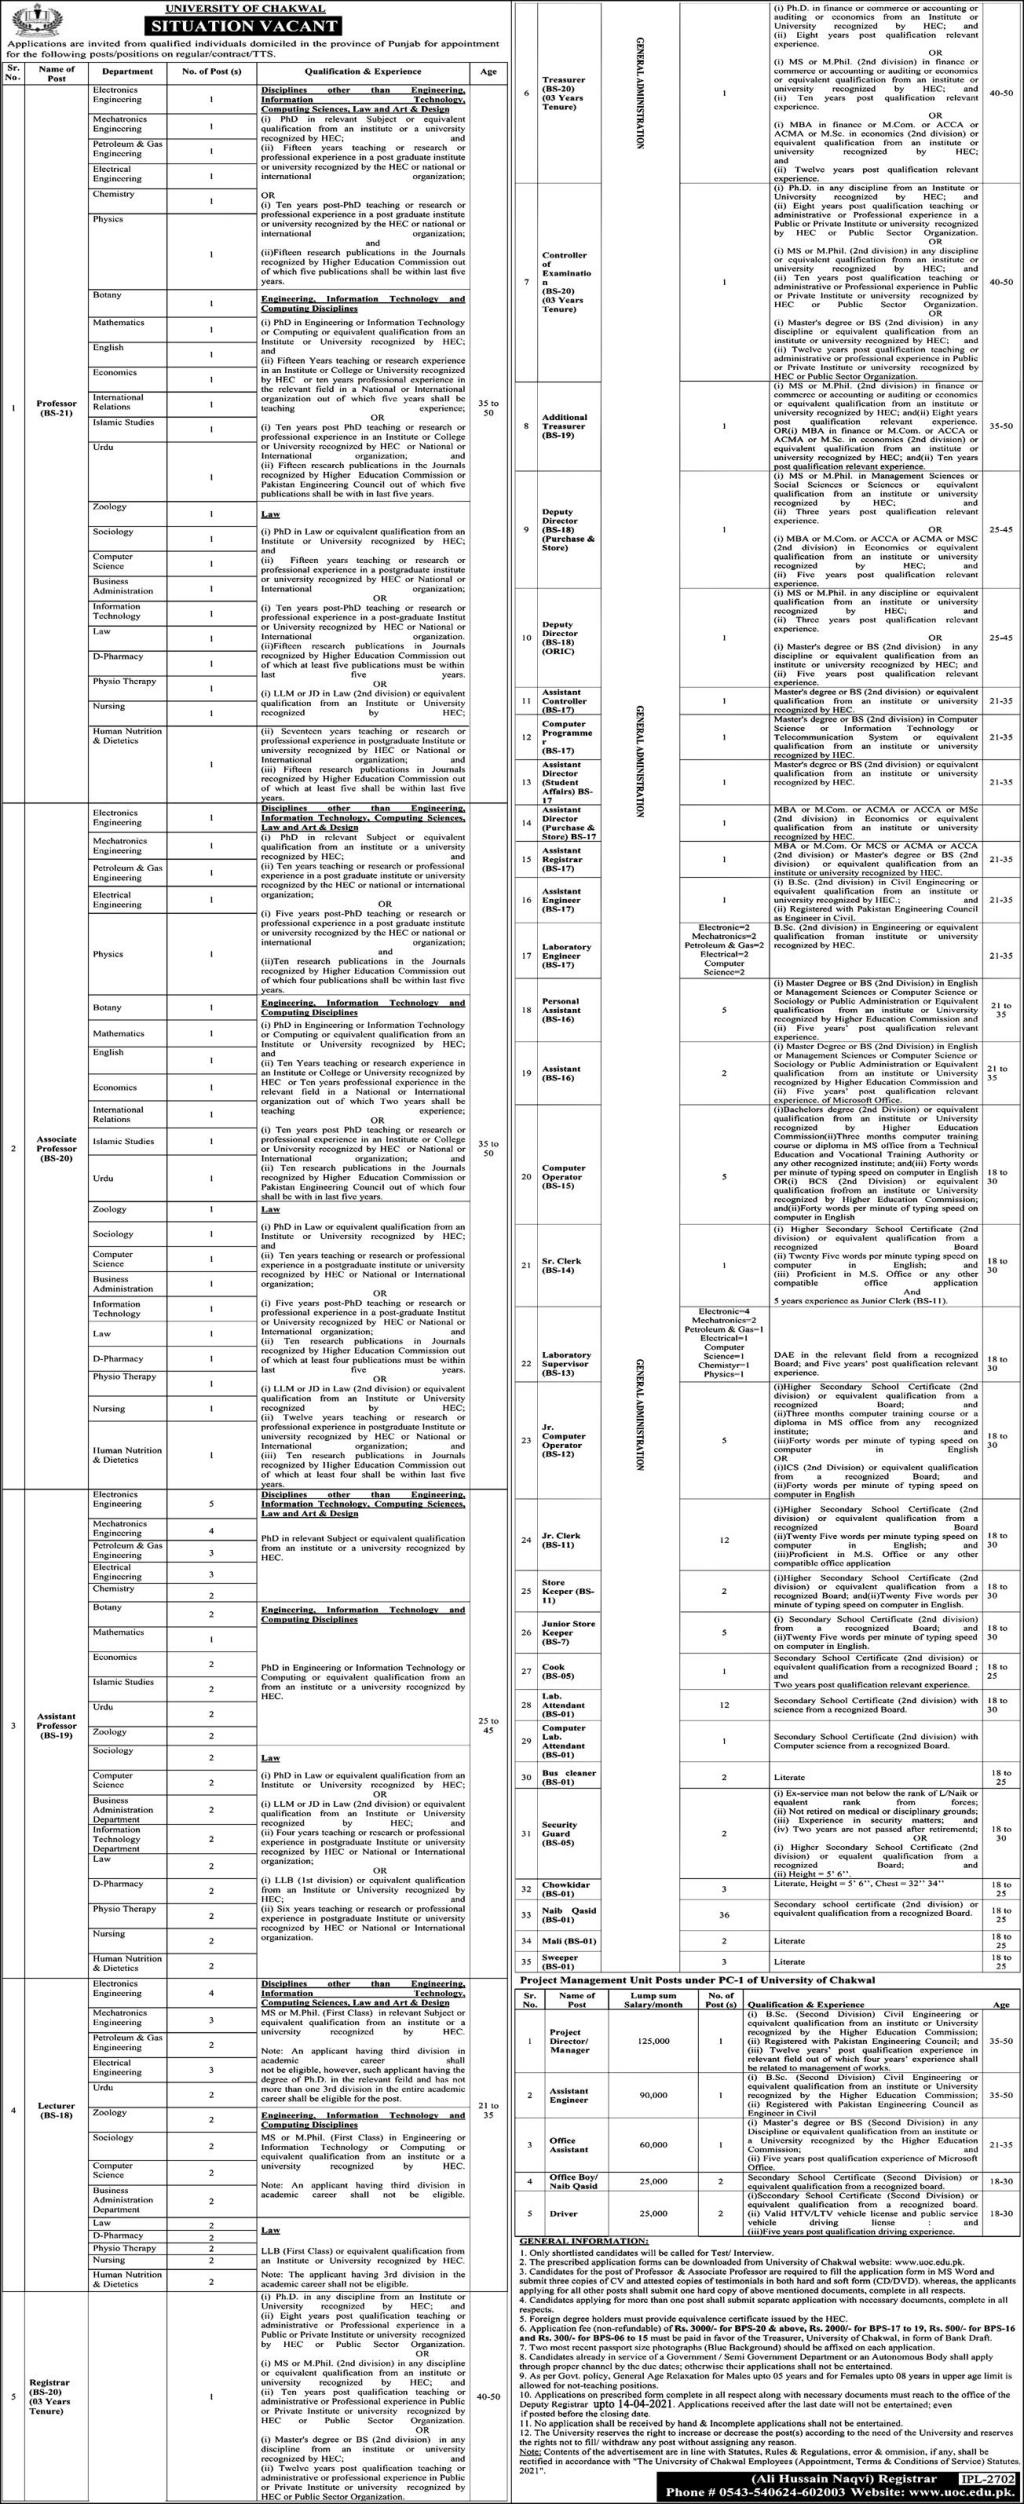 University of Chakwal UOC Jobs 2021 in Pakistan - Download University of Chakwal UOC Job Application Form :- www.uoc.edu.pk - How to Apply For University of Chakwal UOC Jobs 2021